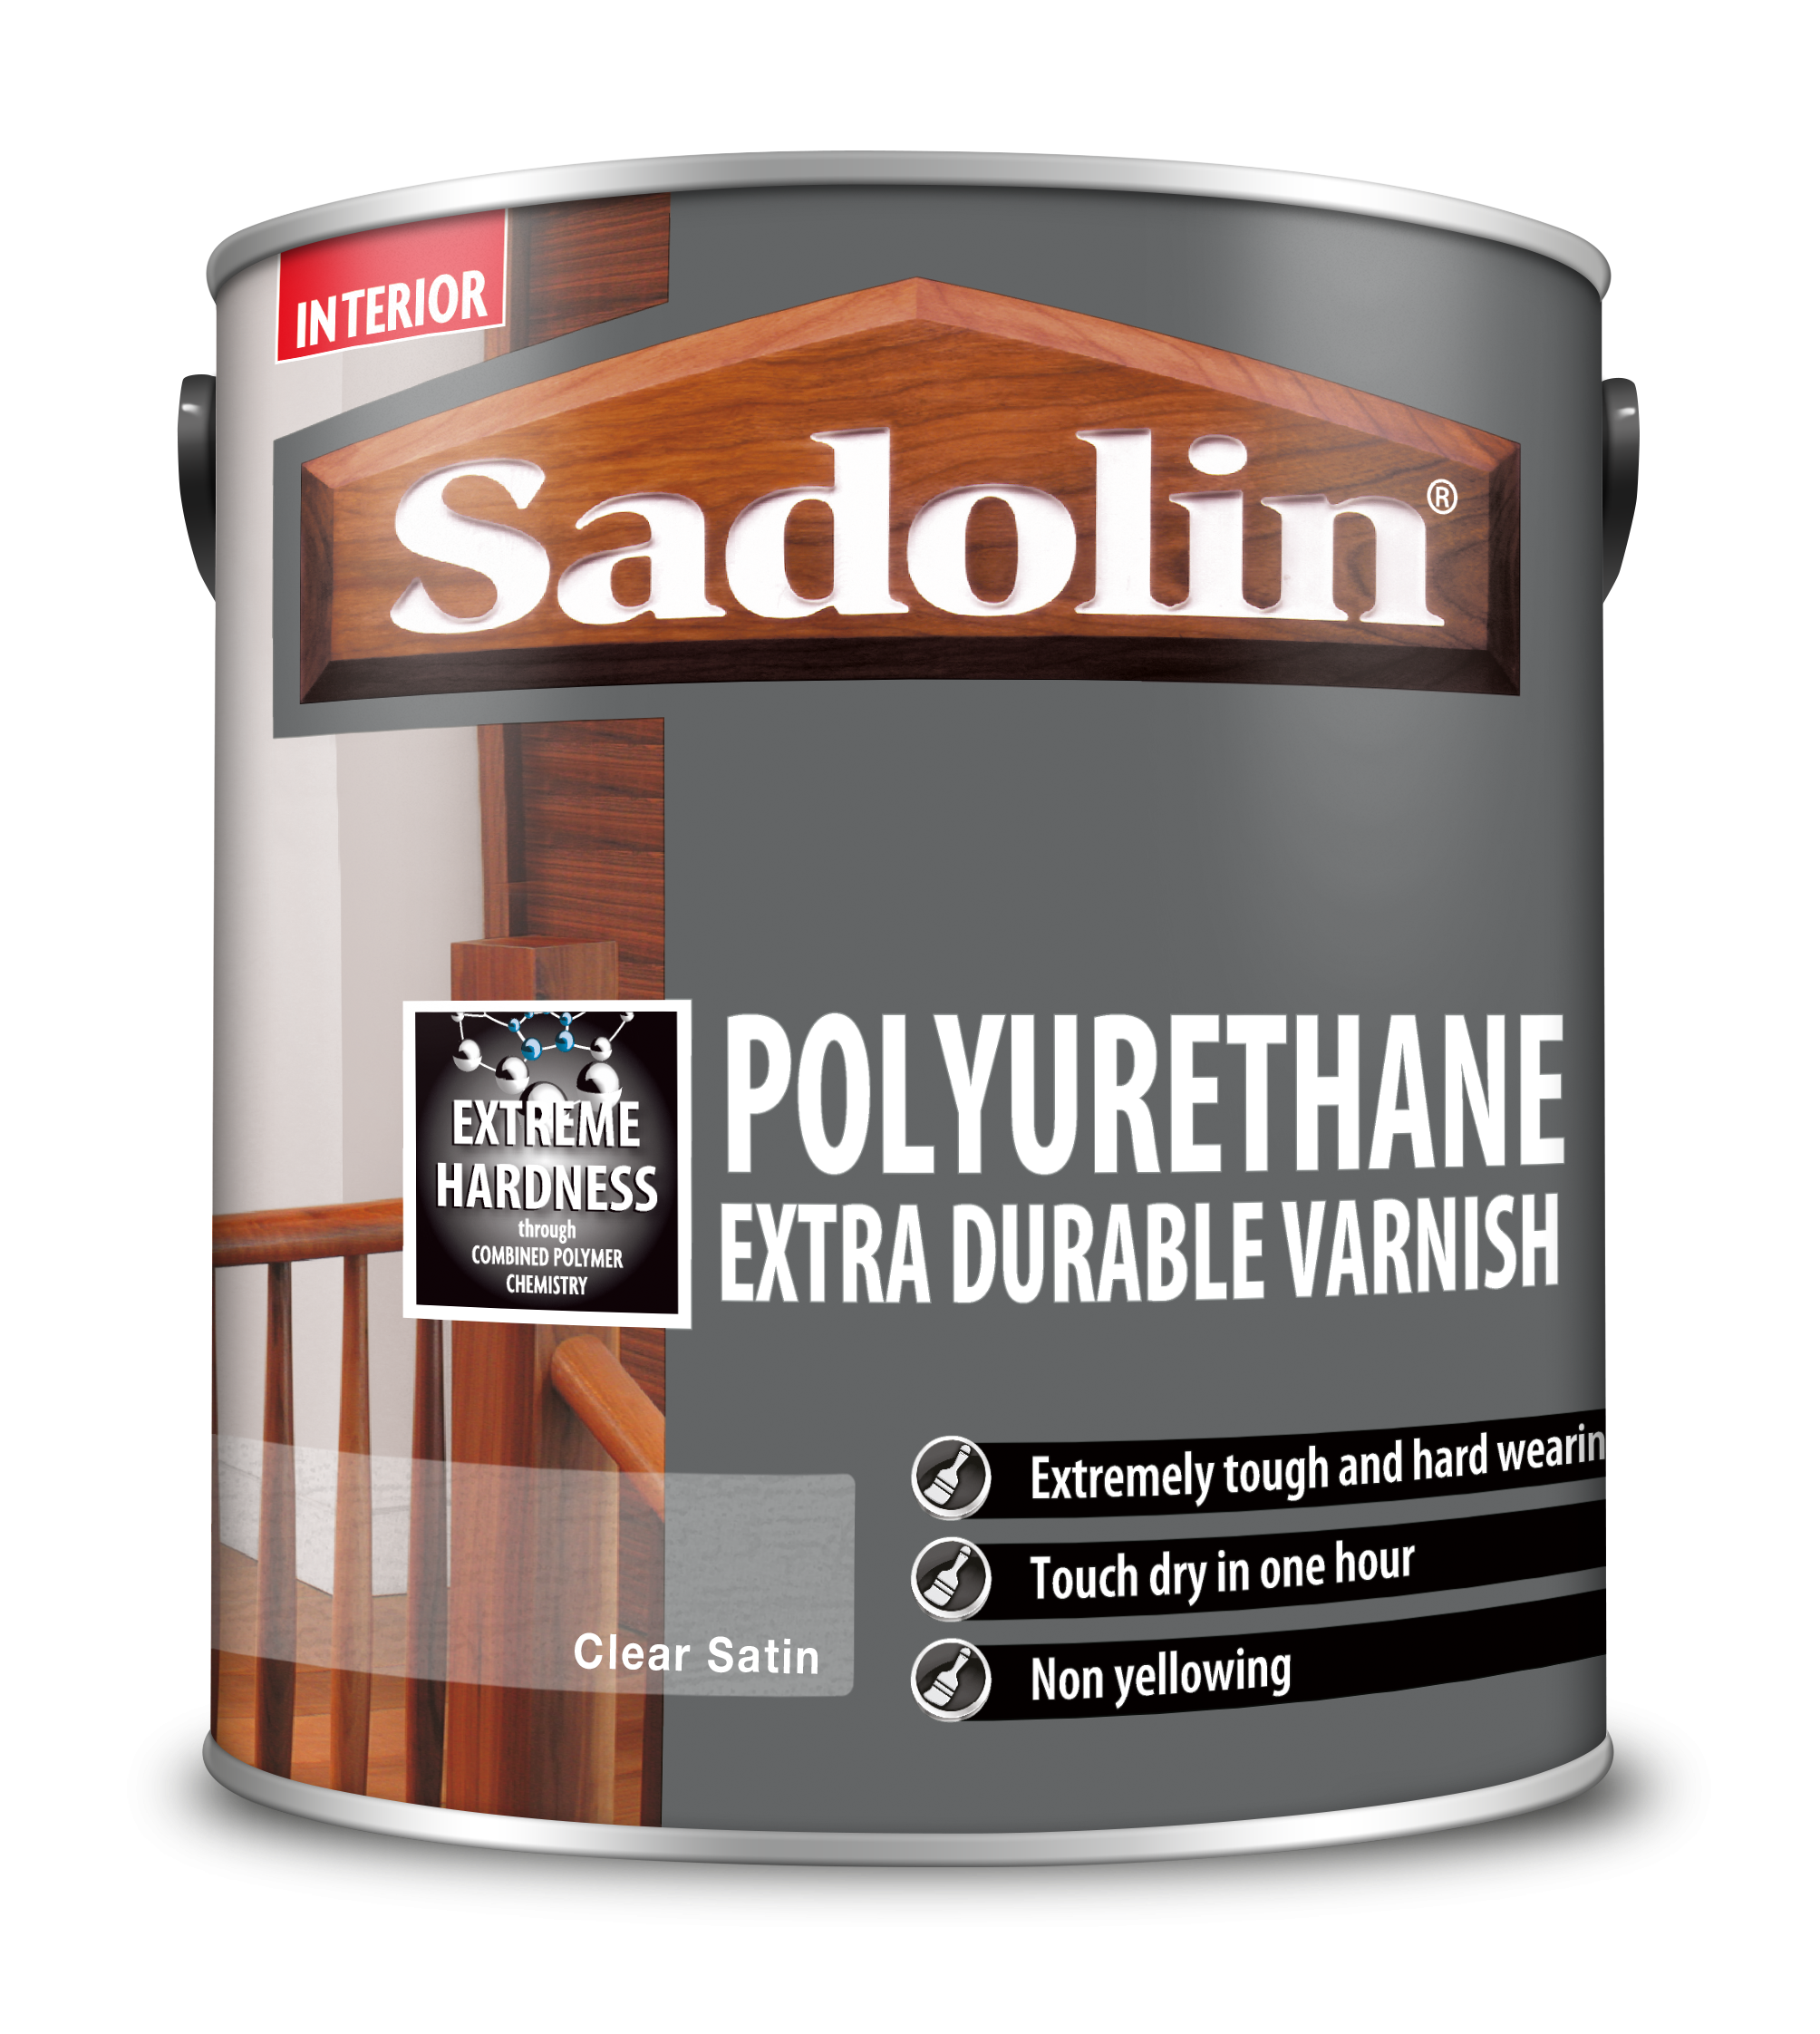 Sadolin Polyurethane Extra Durable Varnish Clear Satin 2.5L [MPPSSWL]  5038011